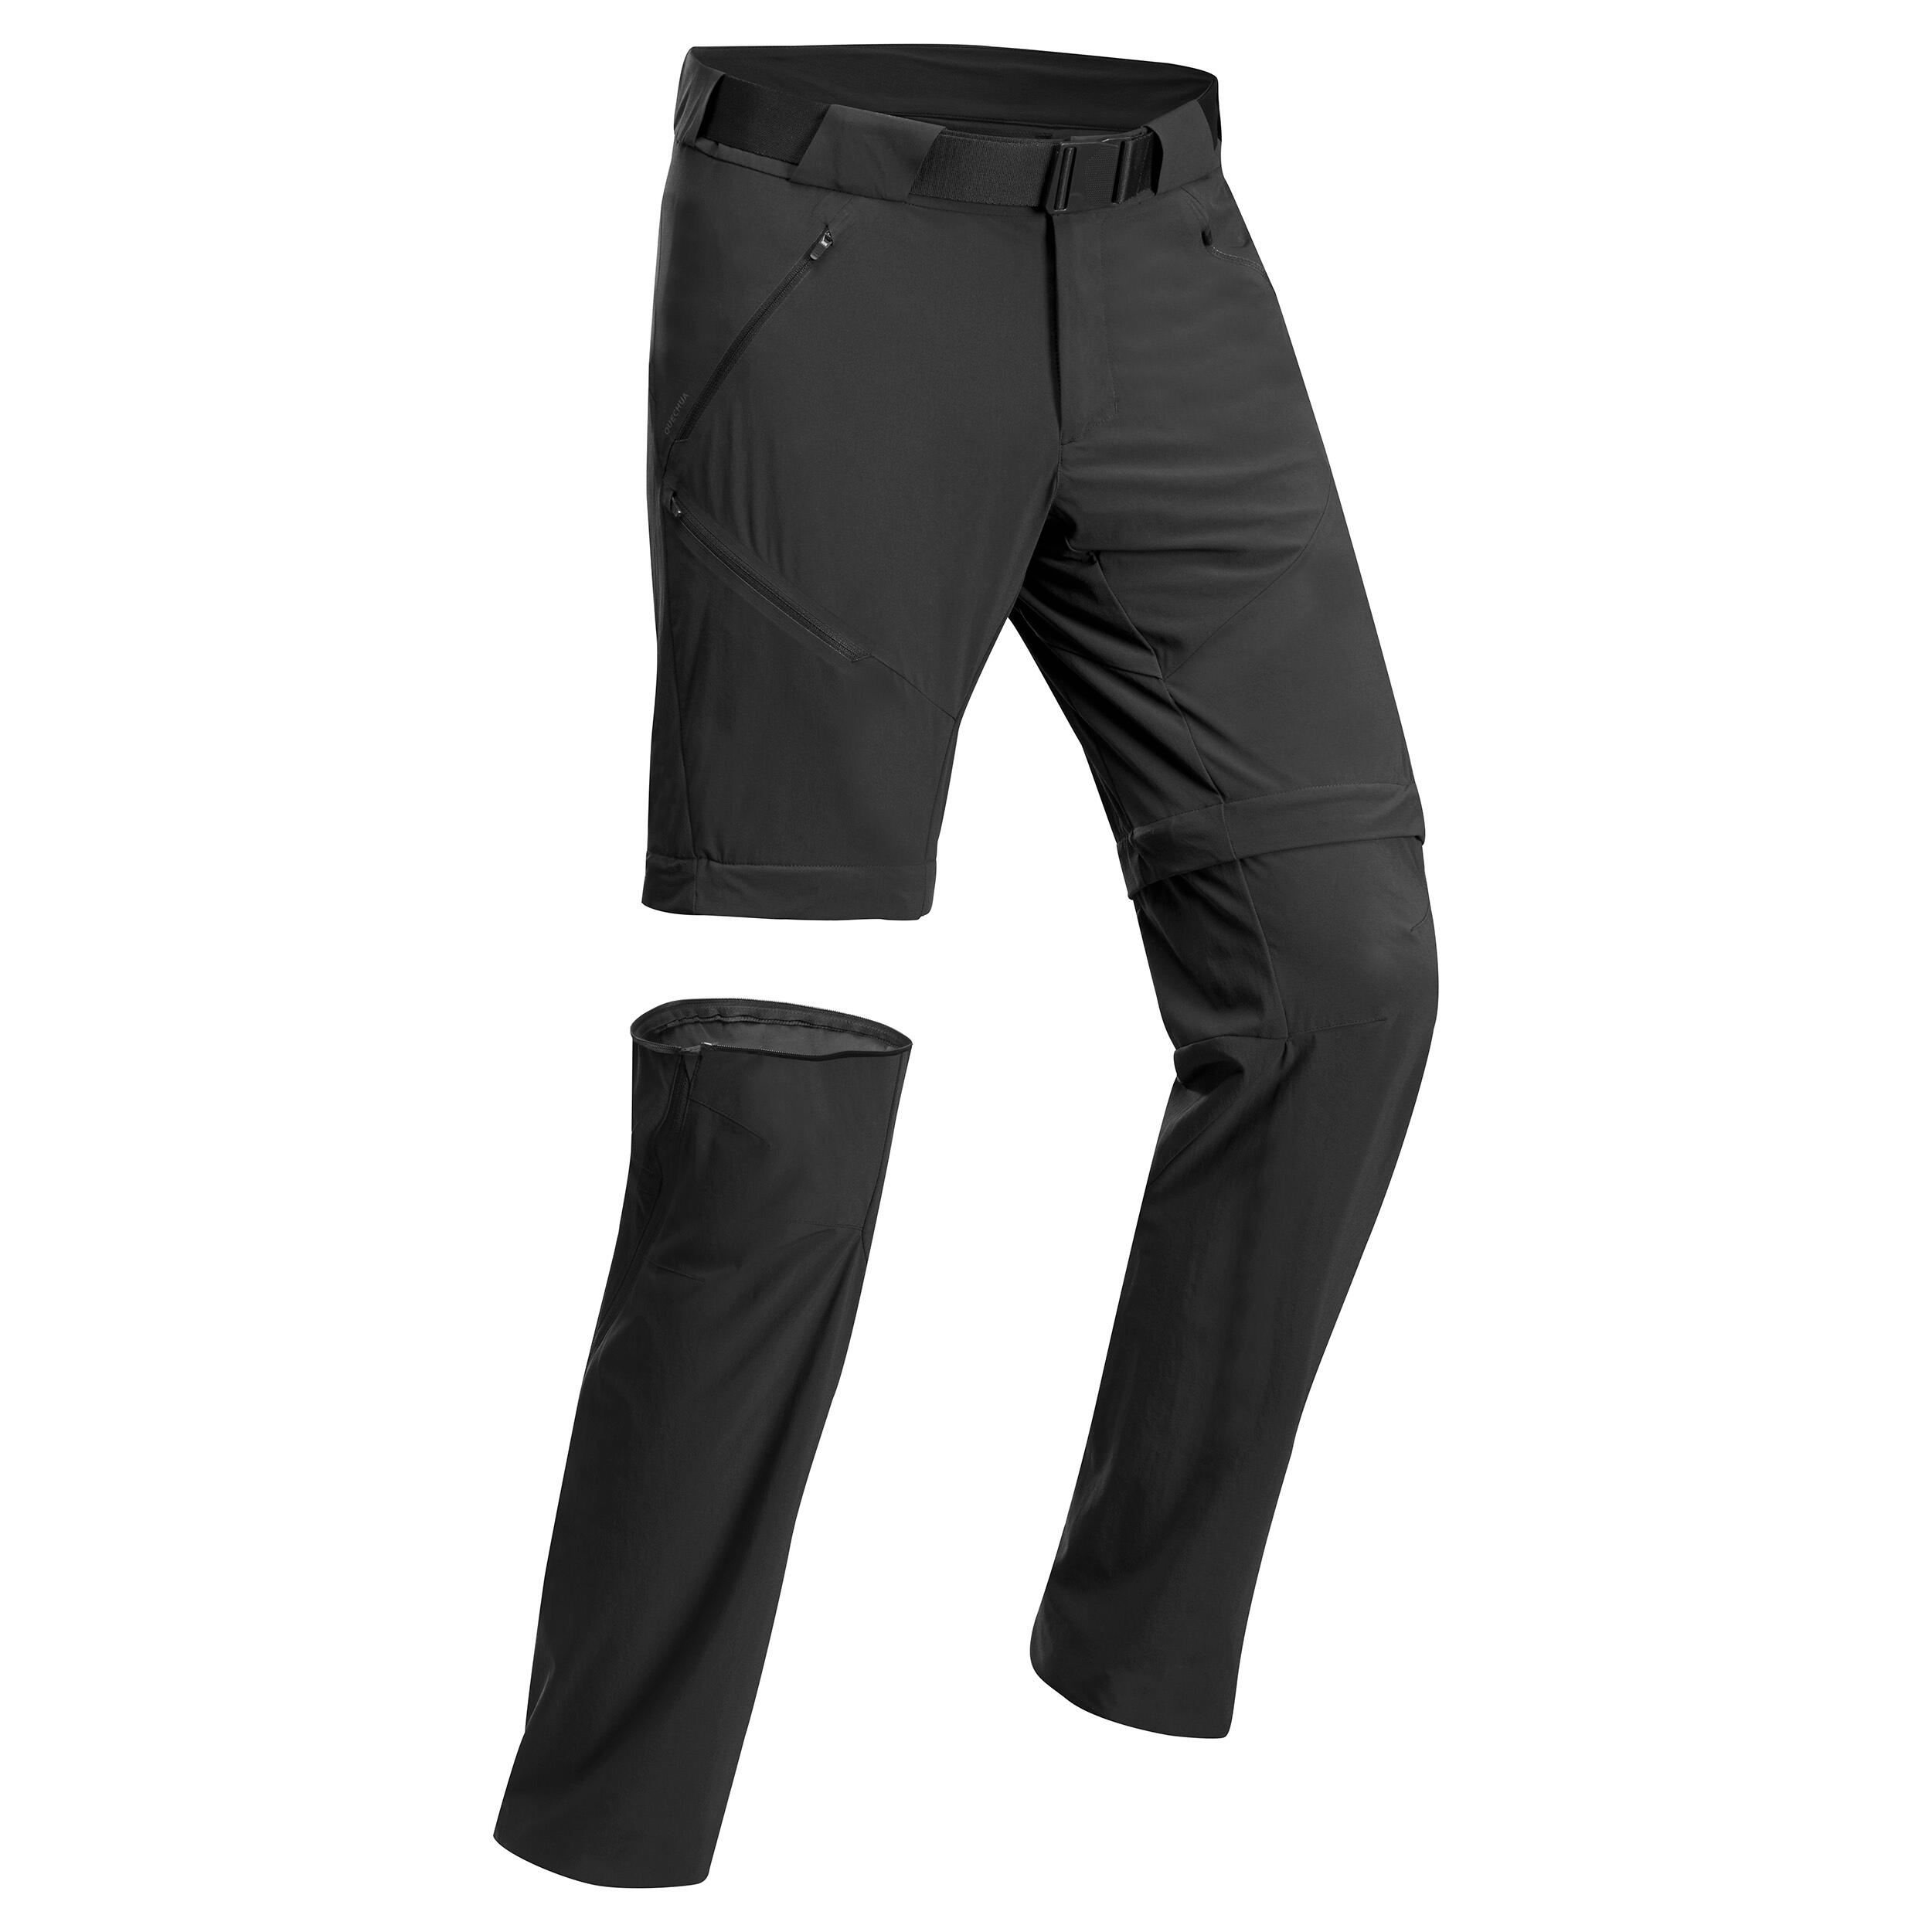 DECATHLON GEOLOGIC MEN'S Convertible Walking Hiking Climbing Trousers  Shorts £19.50 - PicClick UK